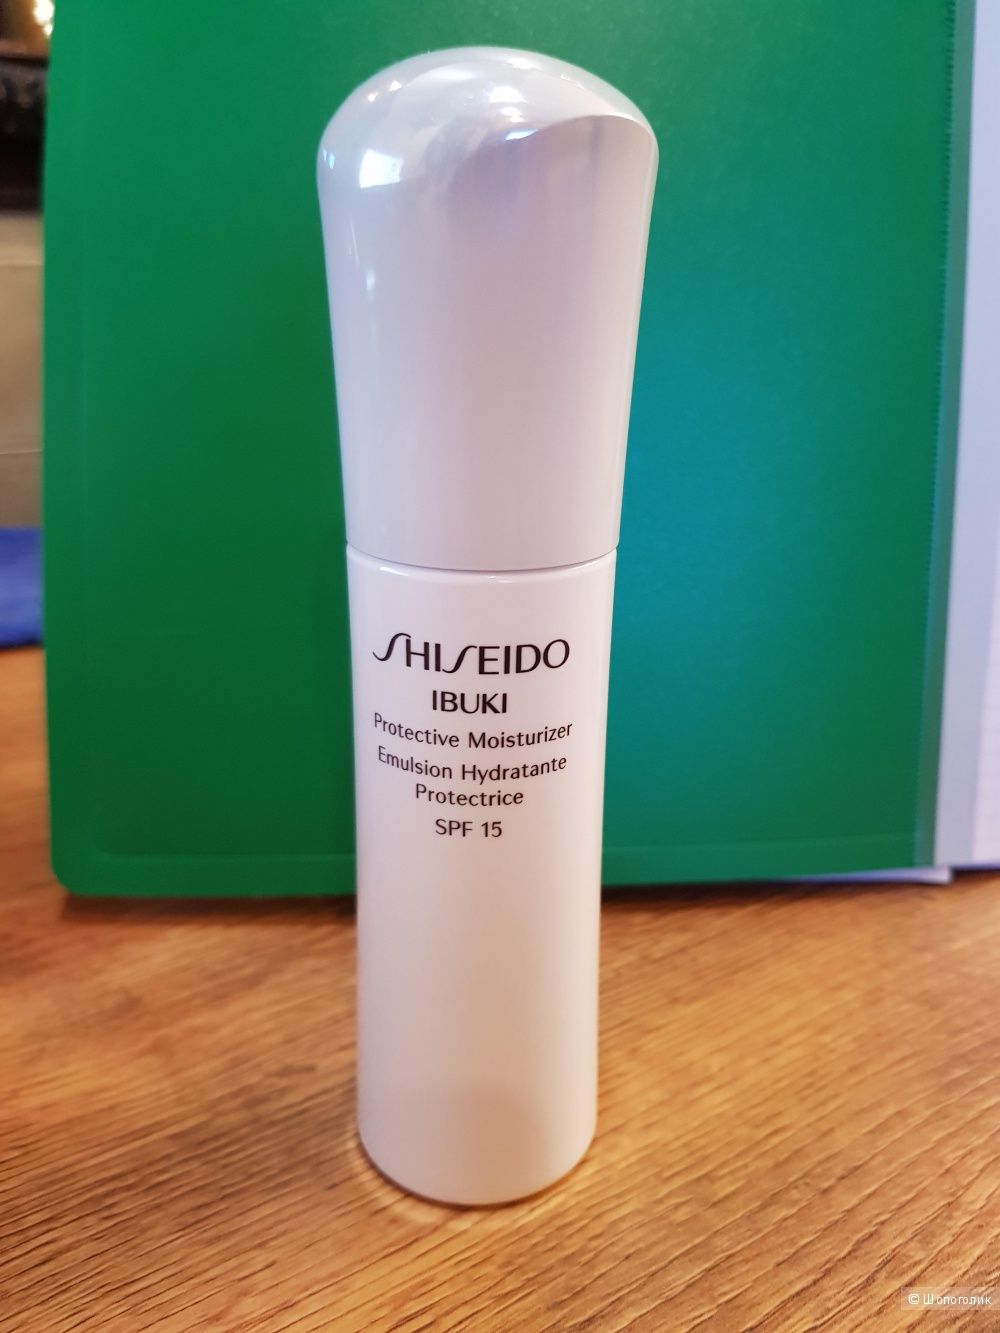 Shiseido iBUKI, Дневная защитная увлажняющая эмульсия, 75 ml